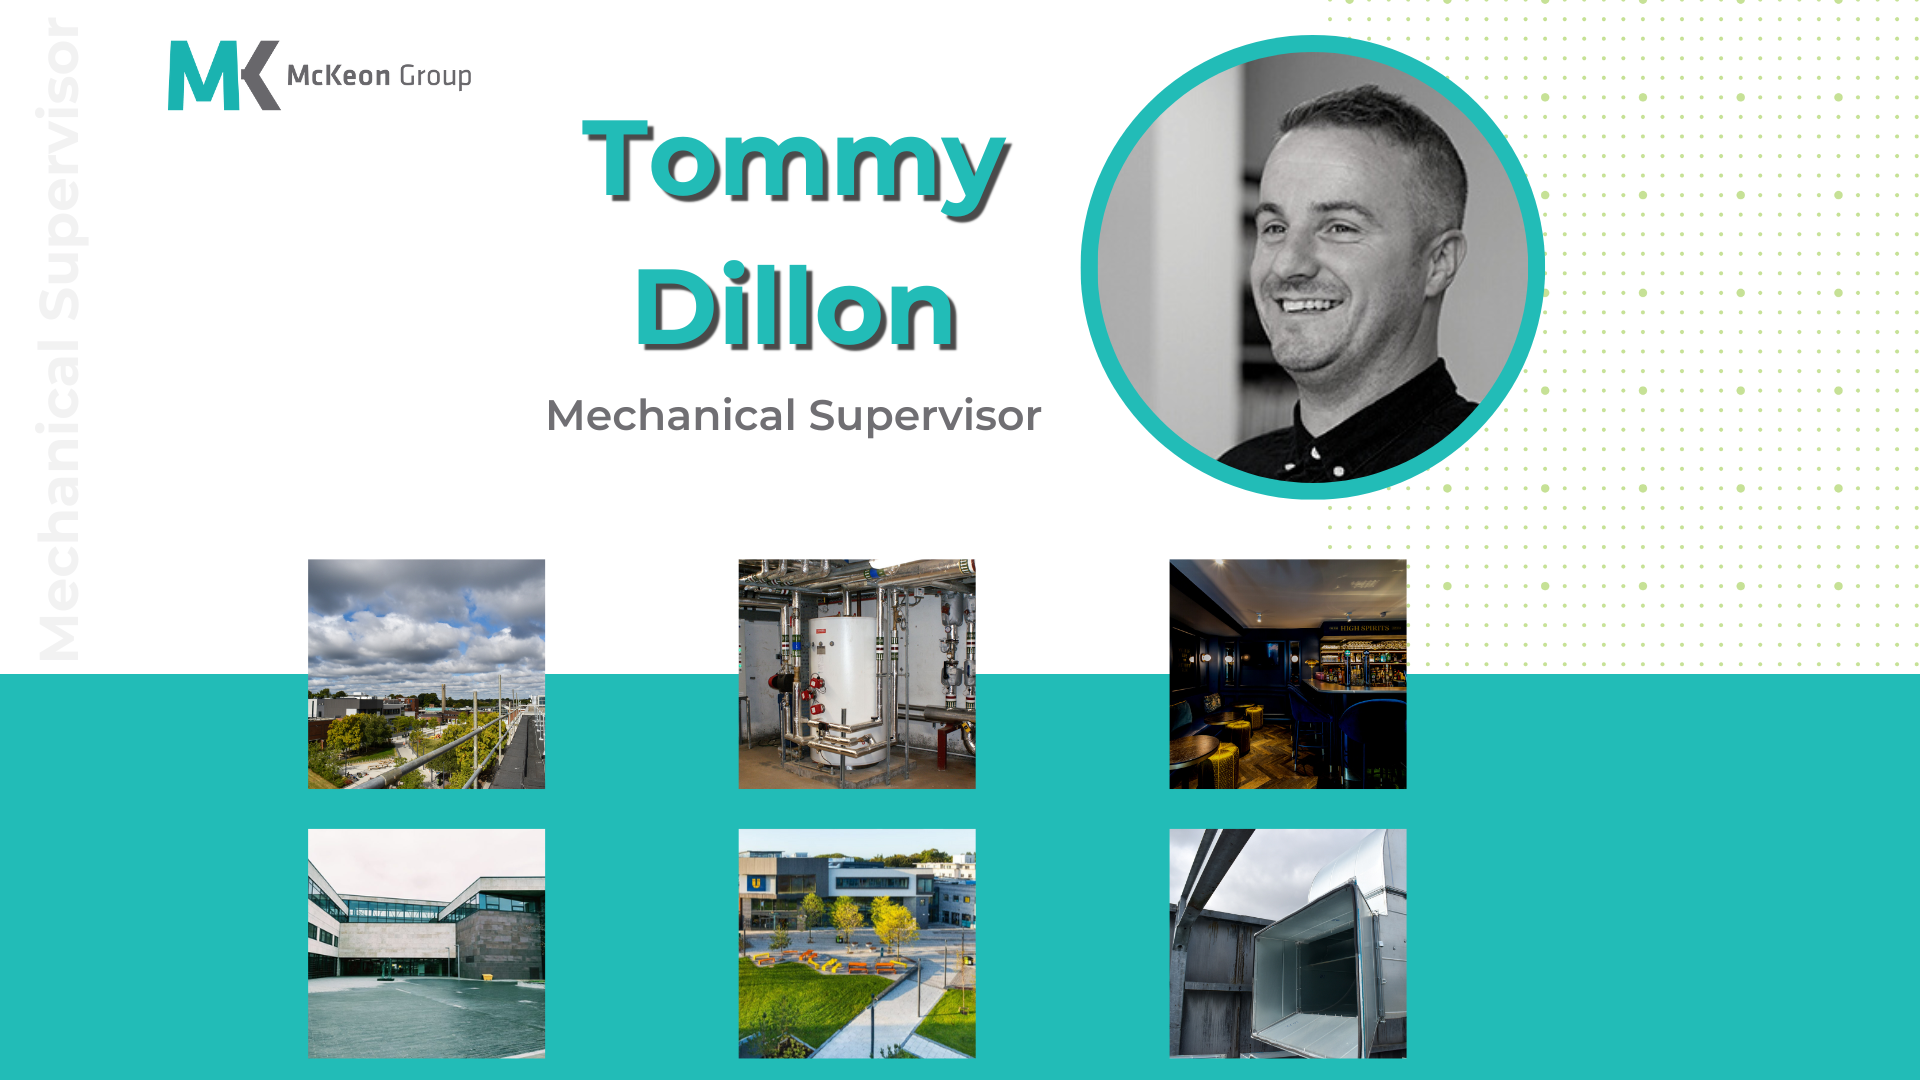 Meet the Team: Tommy Dillon